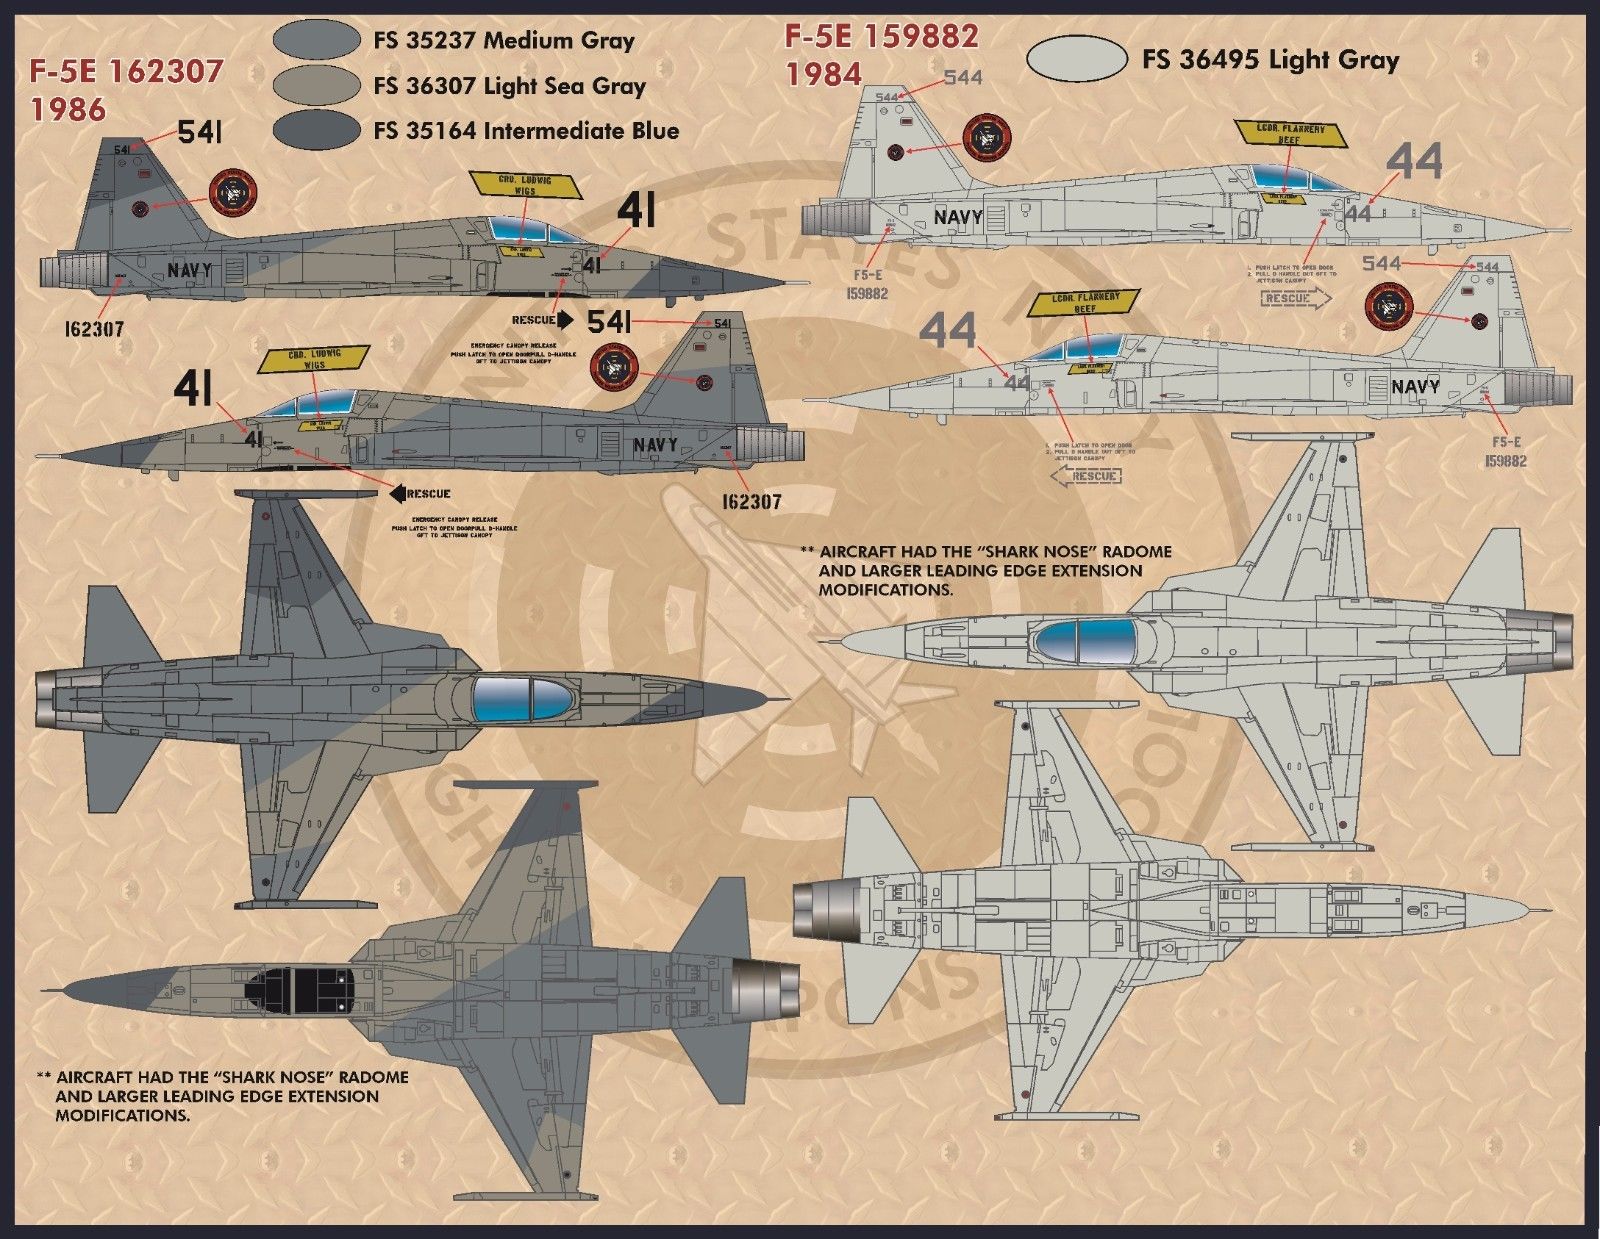 1/72 F-5E/F Tiger II & T-38 Talon, Top Gun Tigers & Talons - Click Image to Close